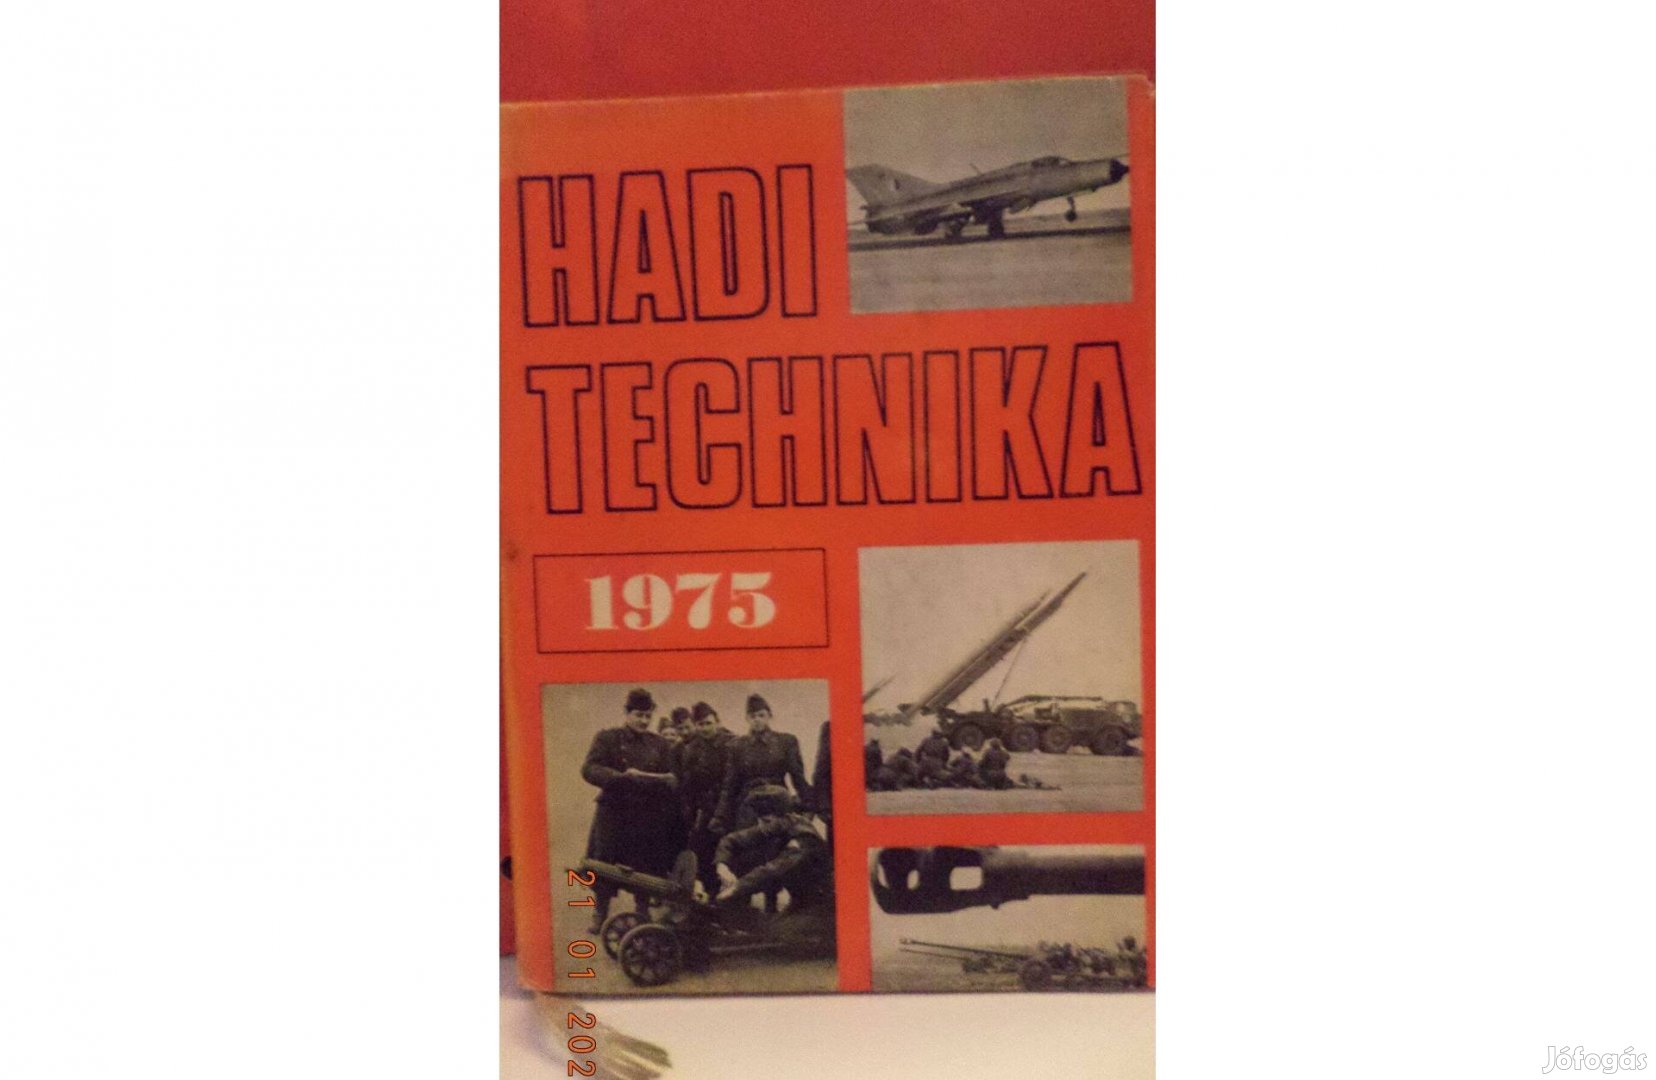 Haditechnika 1975